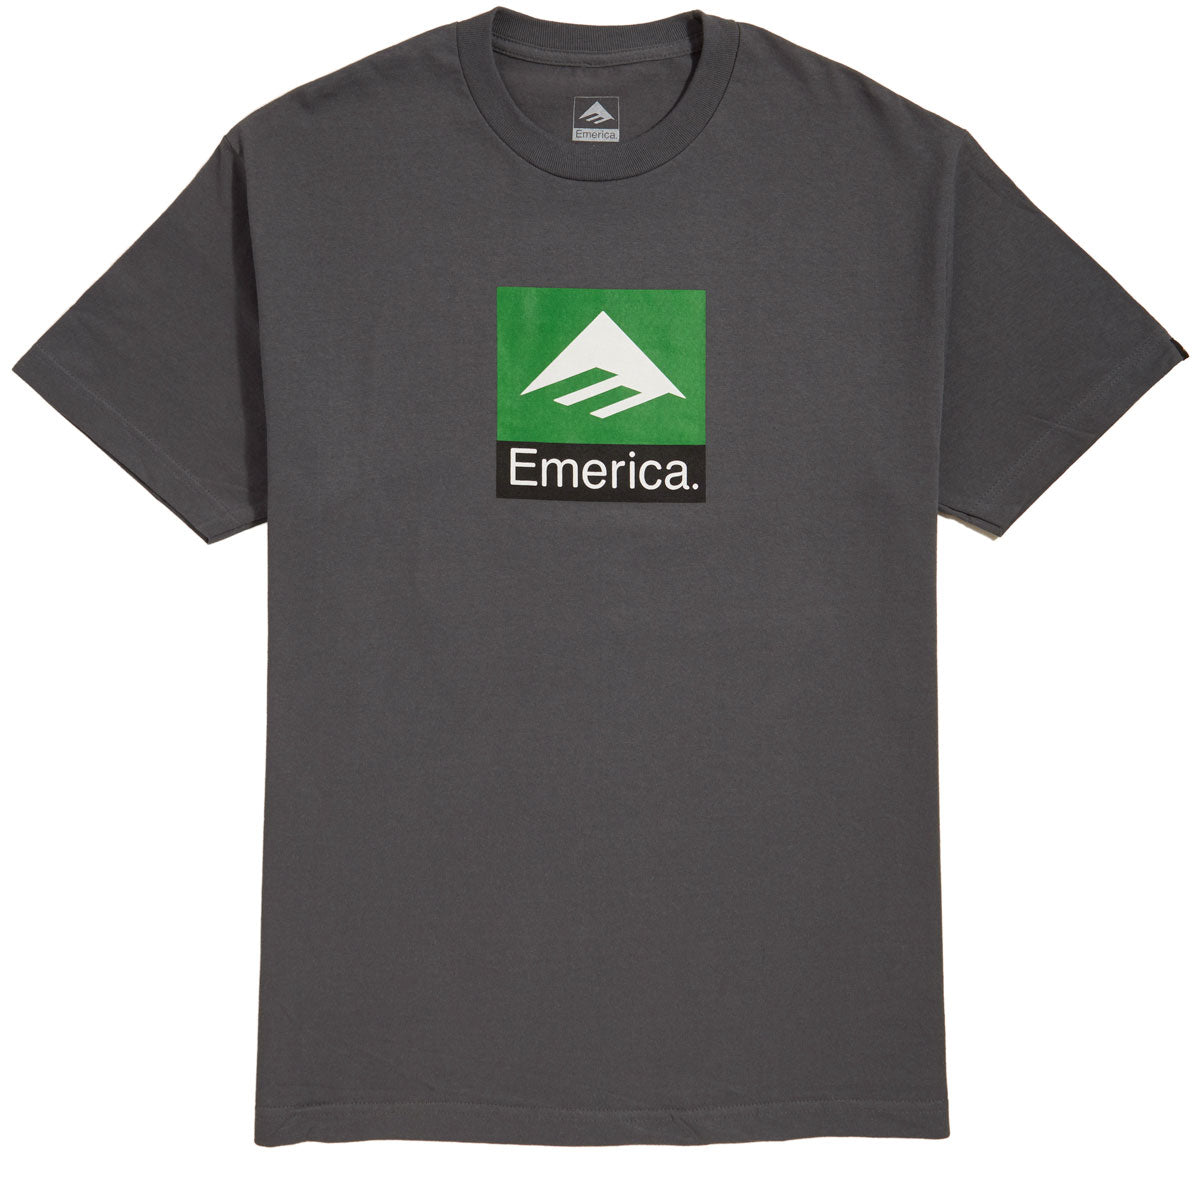 Emerica Classic Combo T-Shirt - Charcoal/Heather image 1